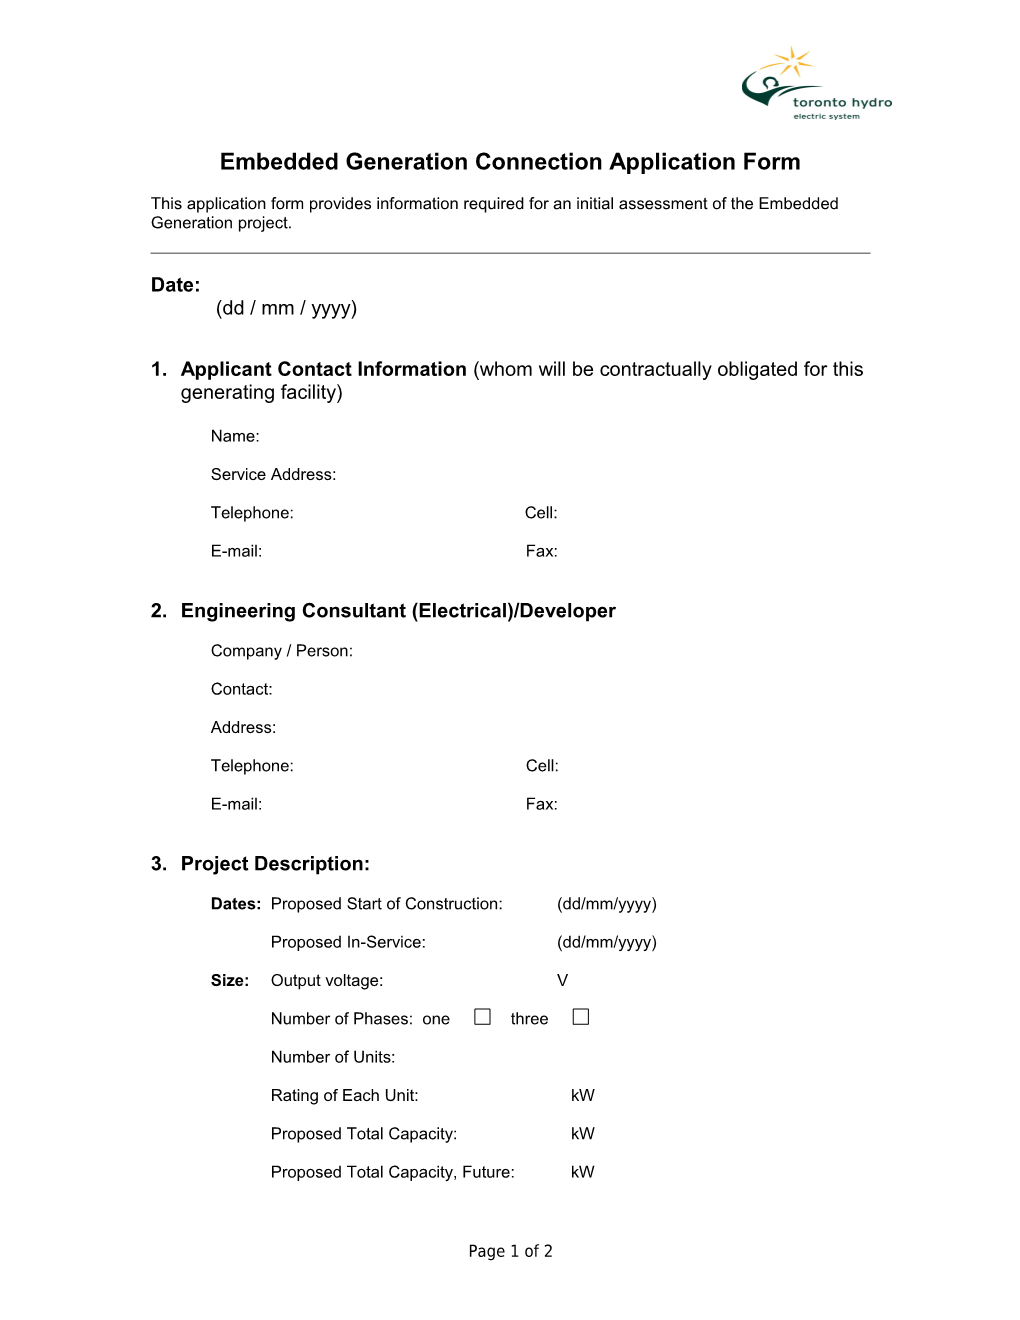 EG Connection Application Form